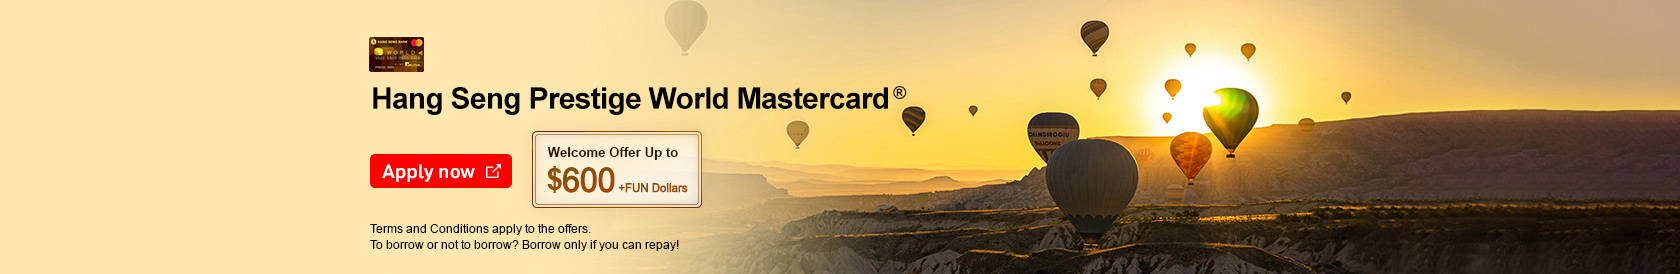 Hang Seng Prestige World Mastercard exclusive buy-1-get-1-free privilege at Michelin restaurants